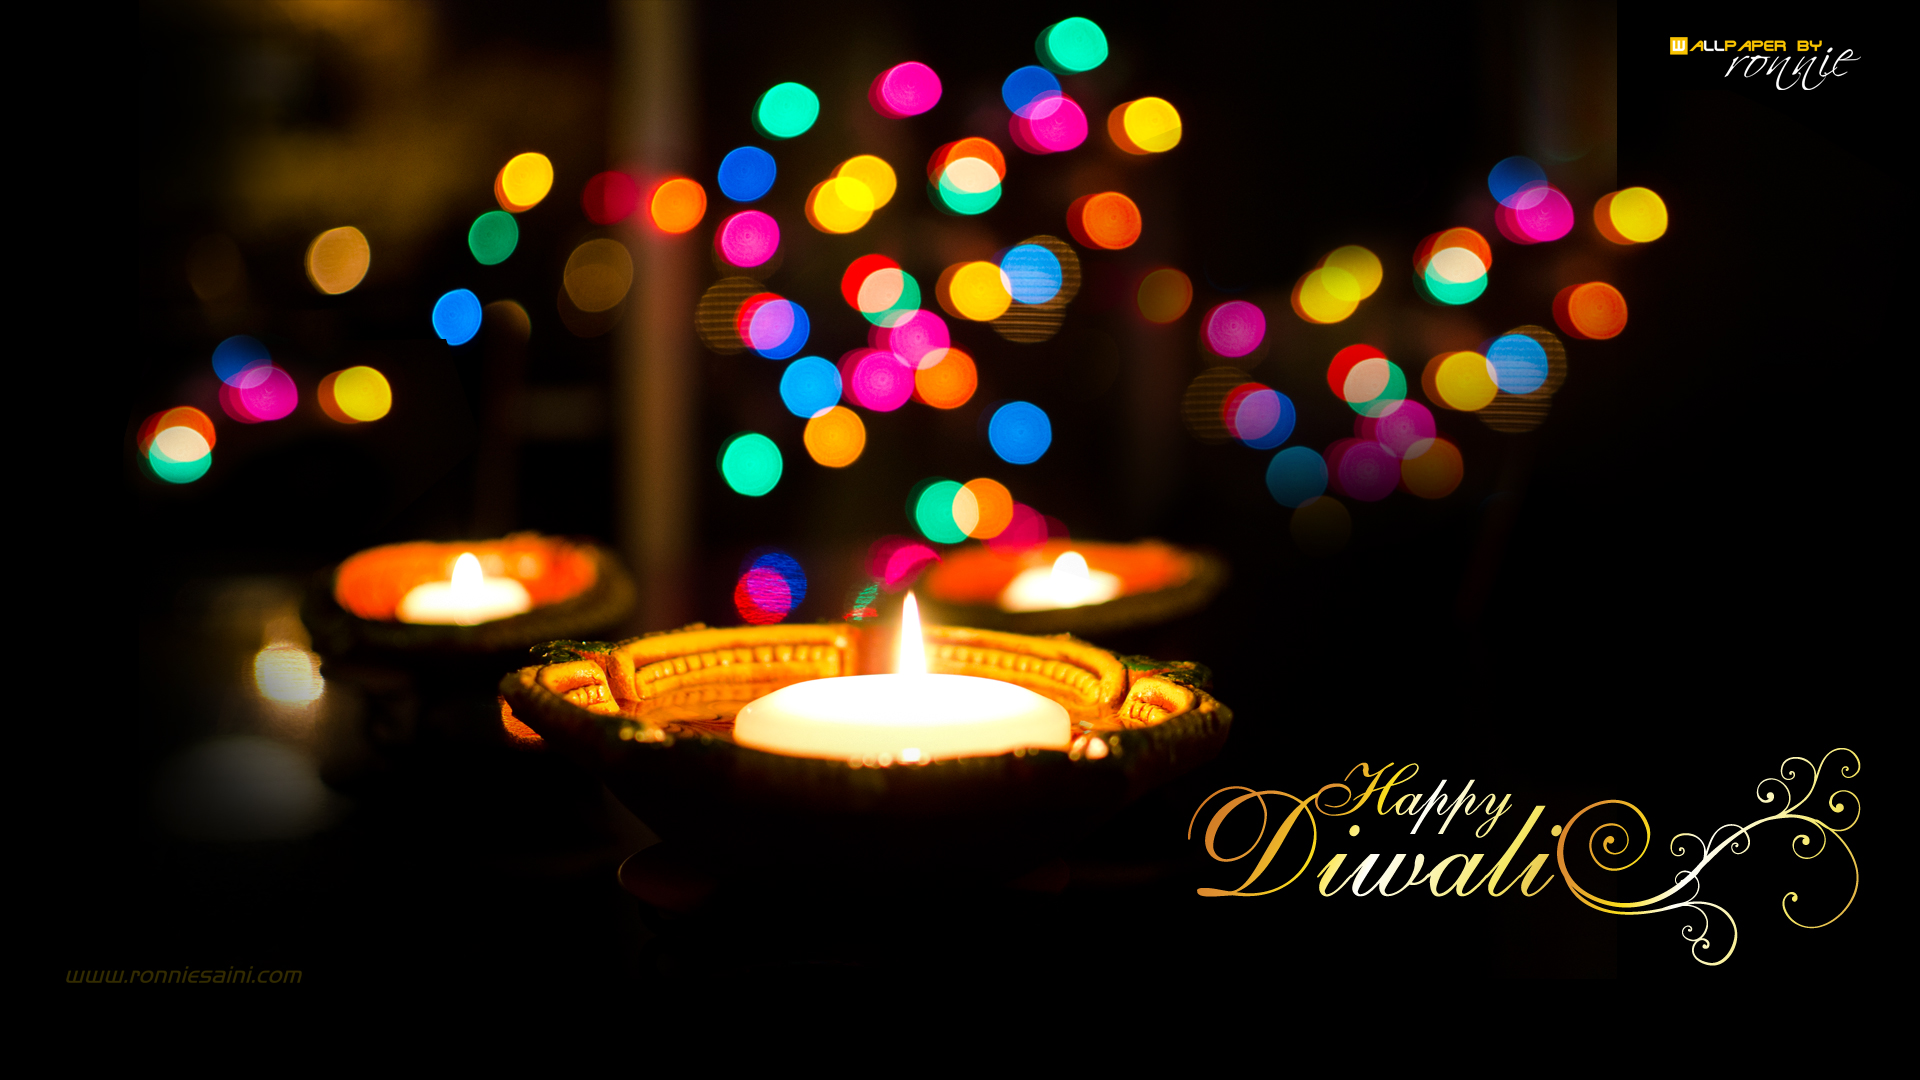 Diwali Greetings (HD) - 1920x1080